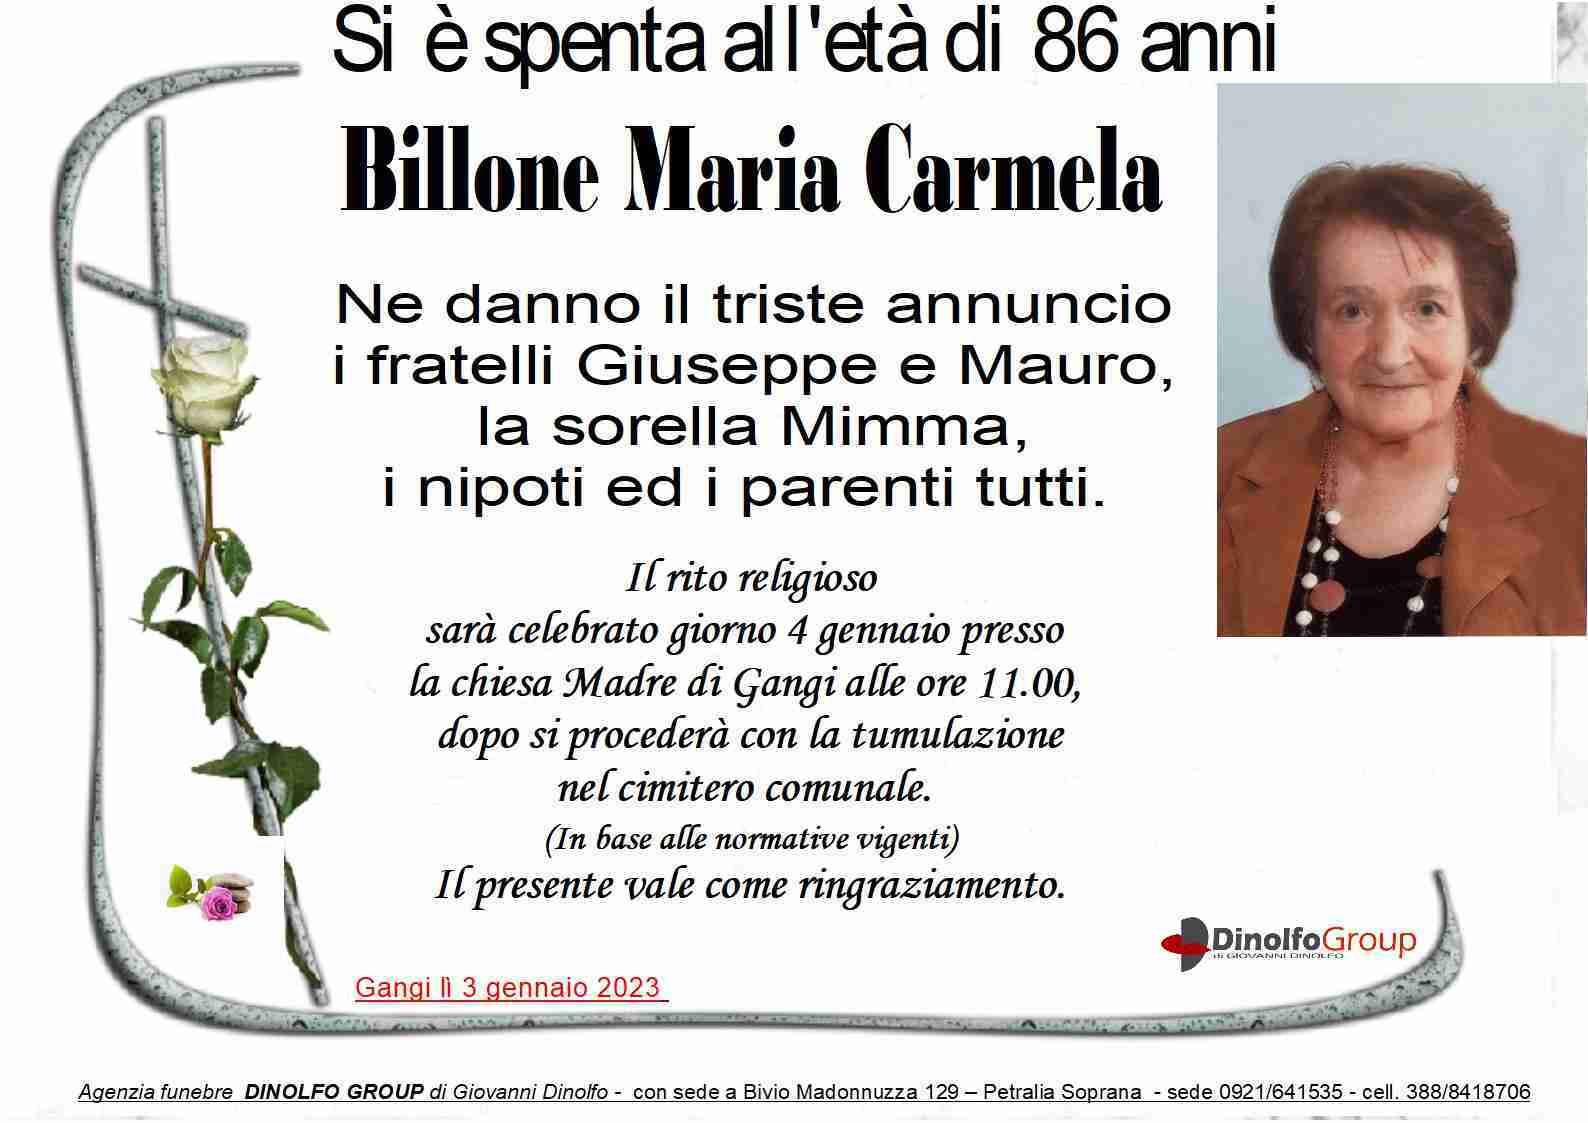 Maria Carmela Billone